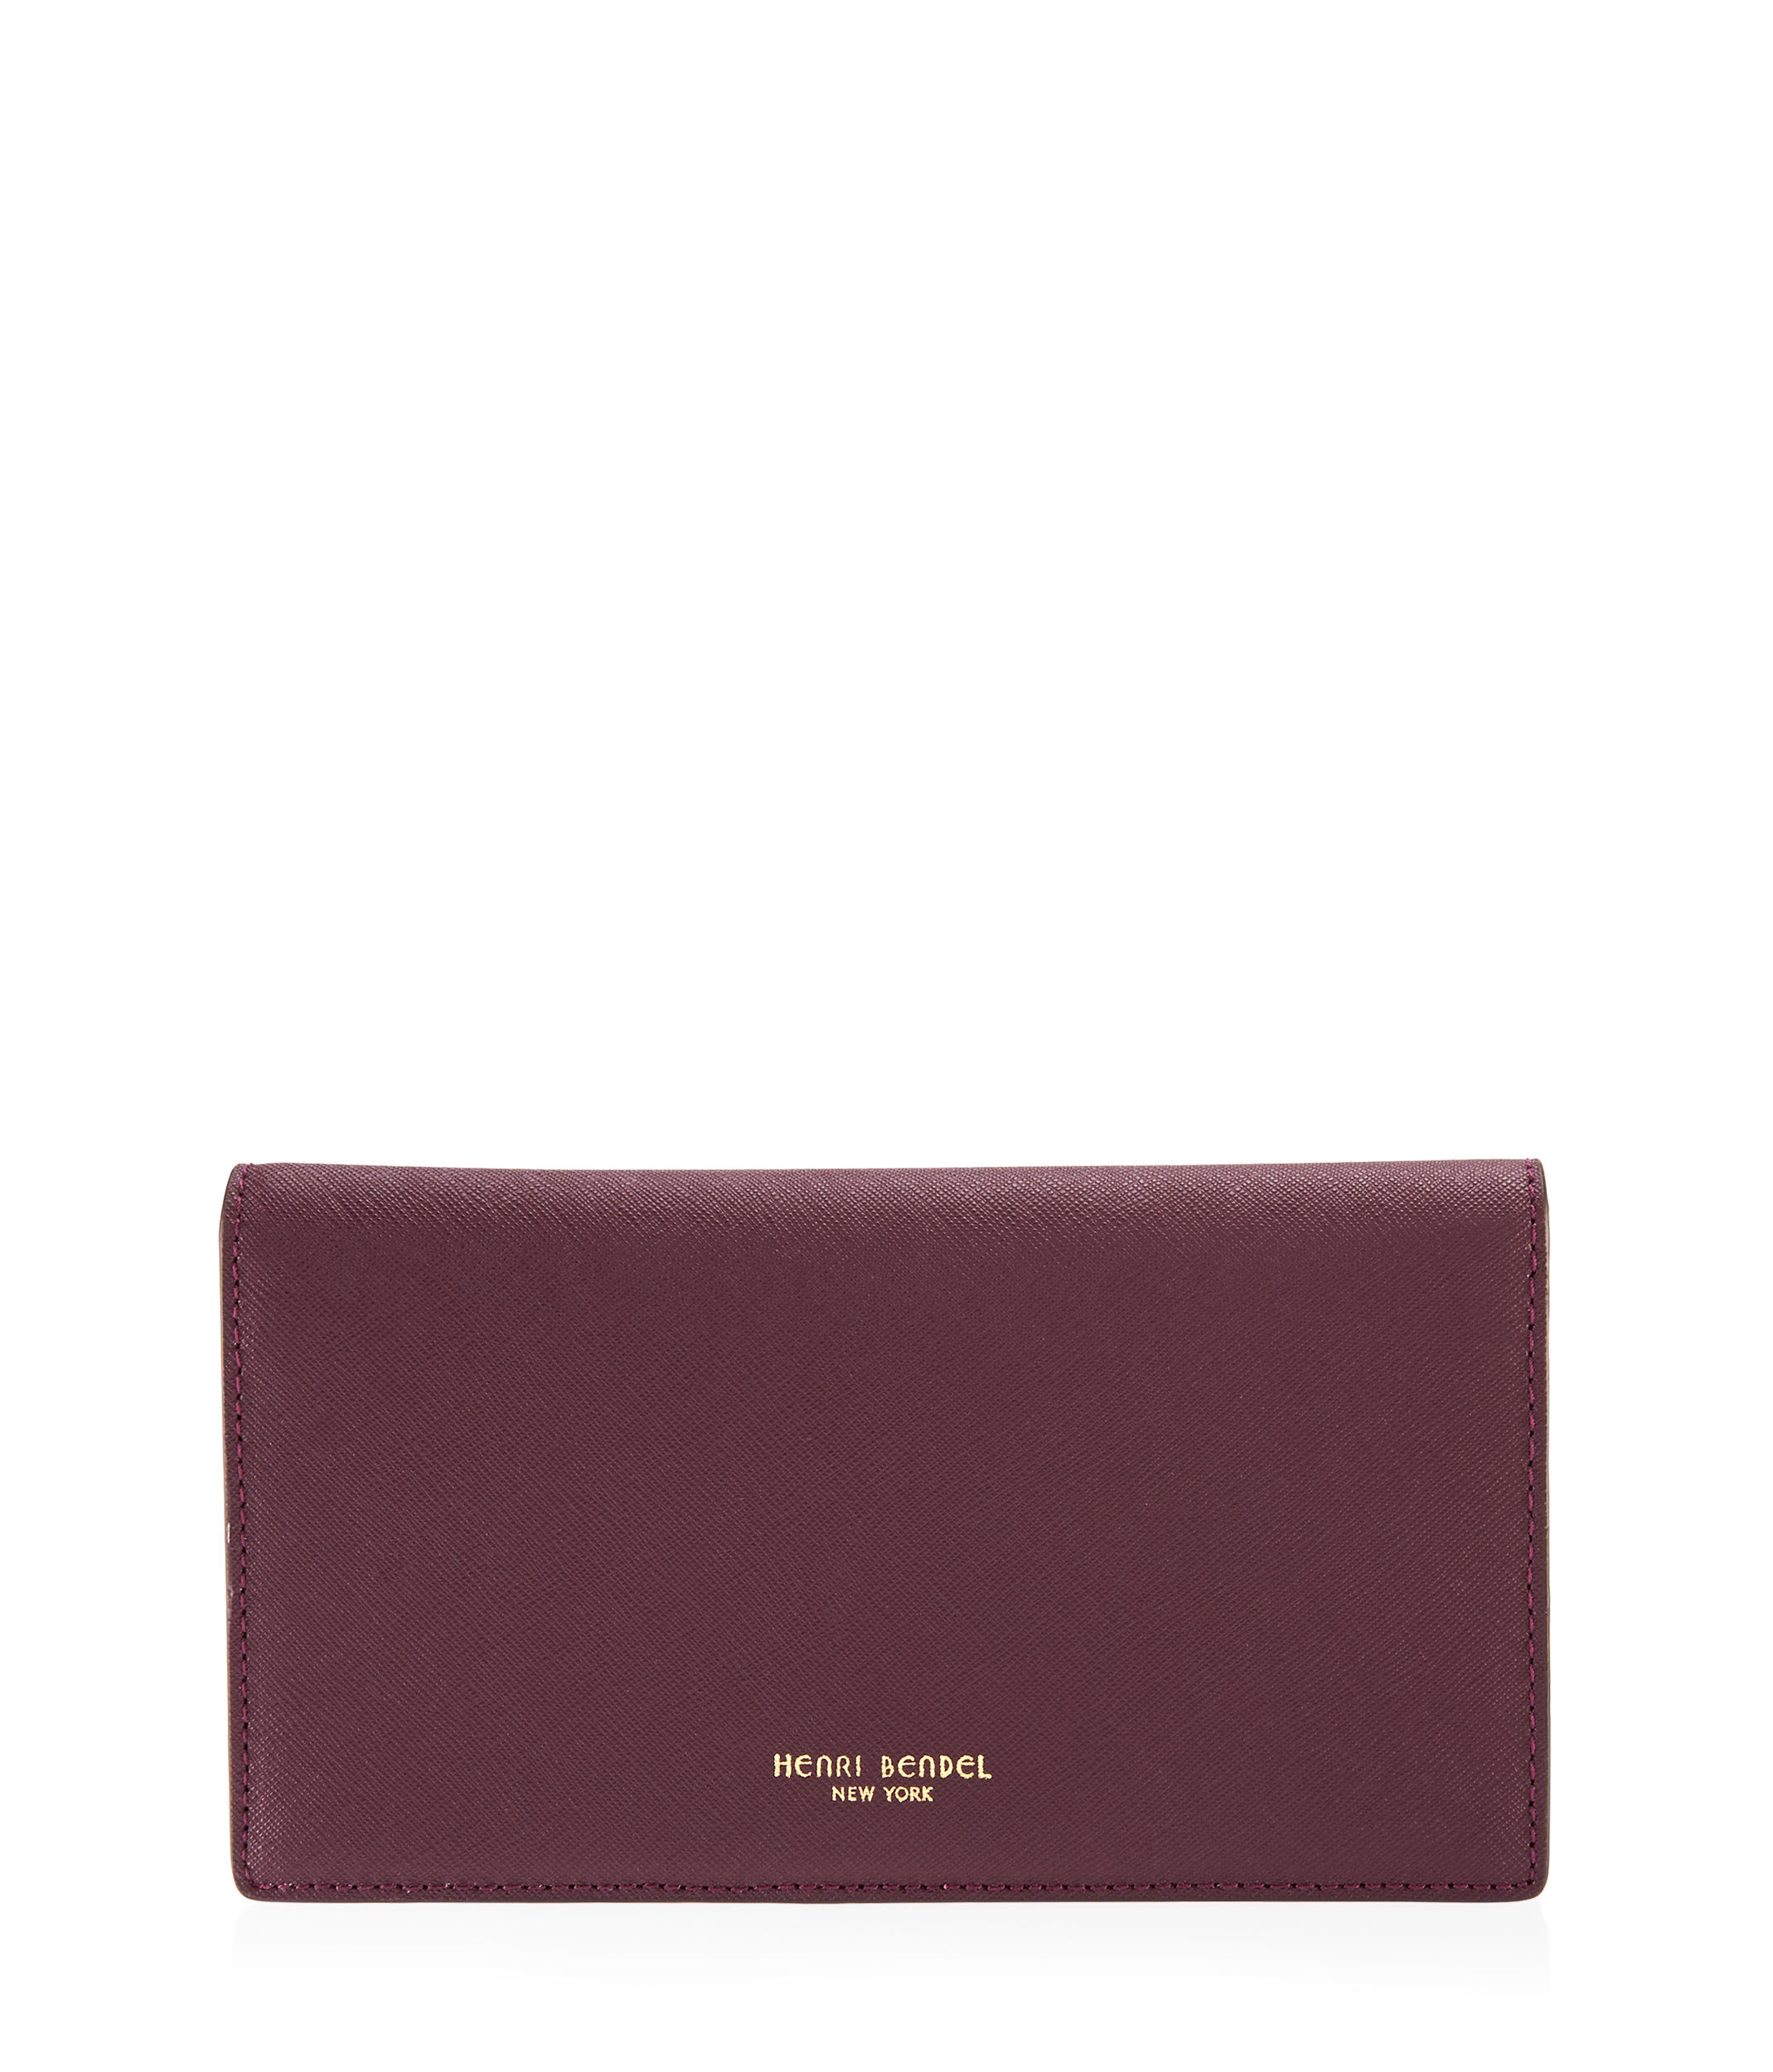 Lyst - Henri Bendel West 57th Portfolio Wallet in Purple